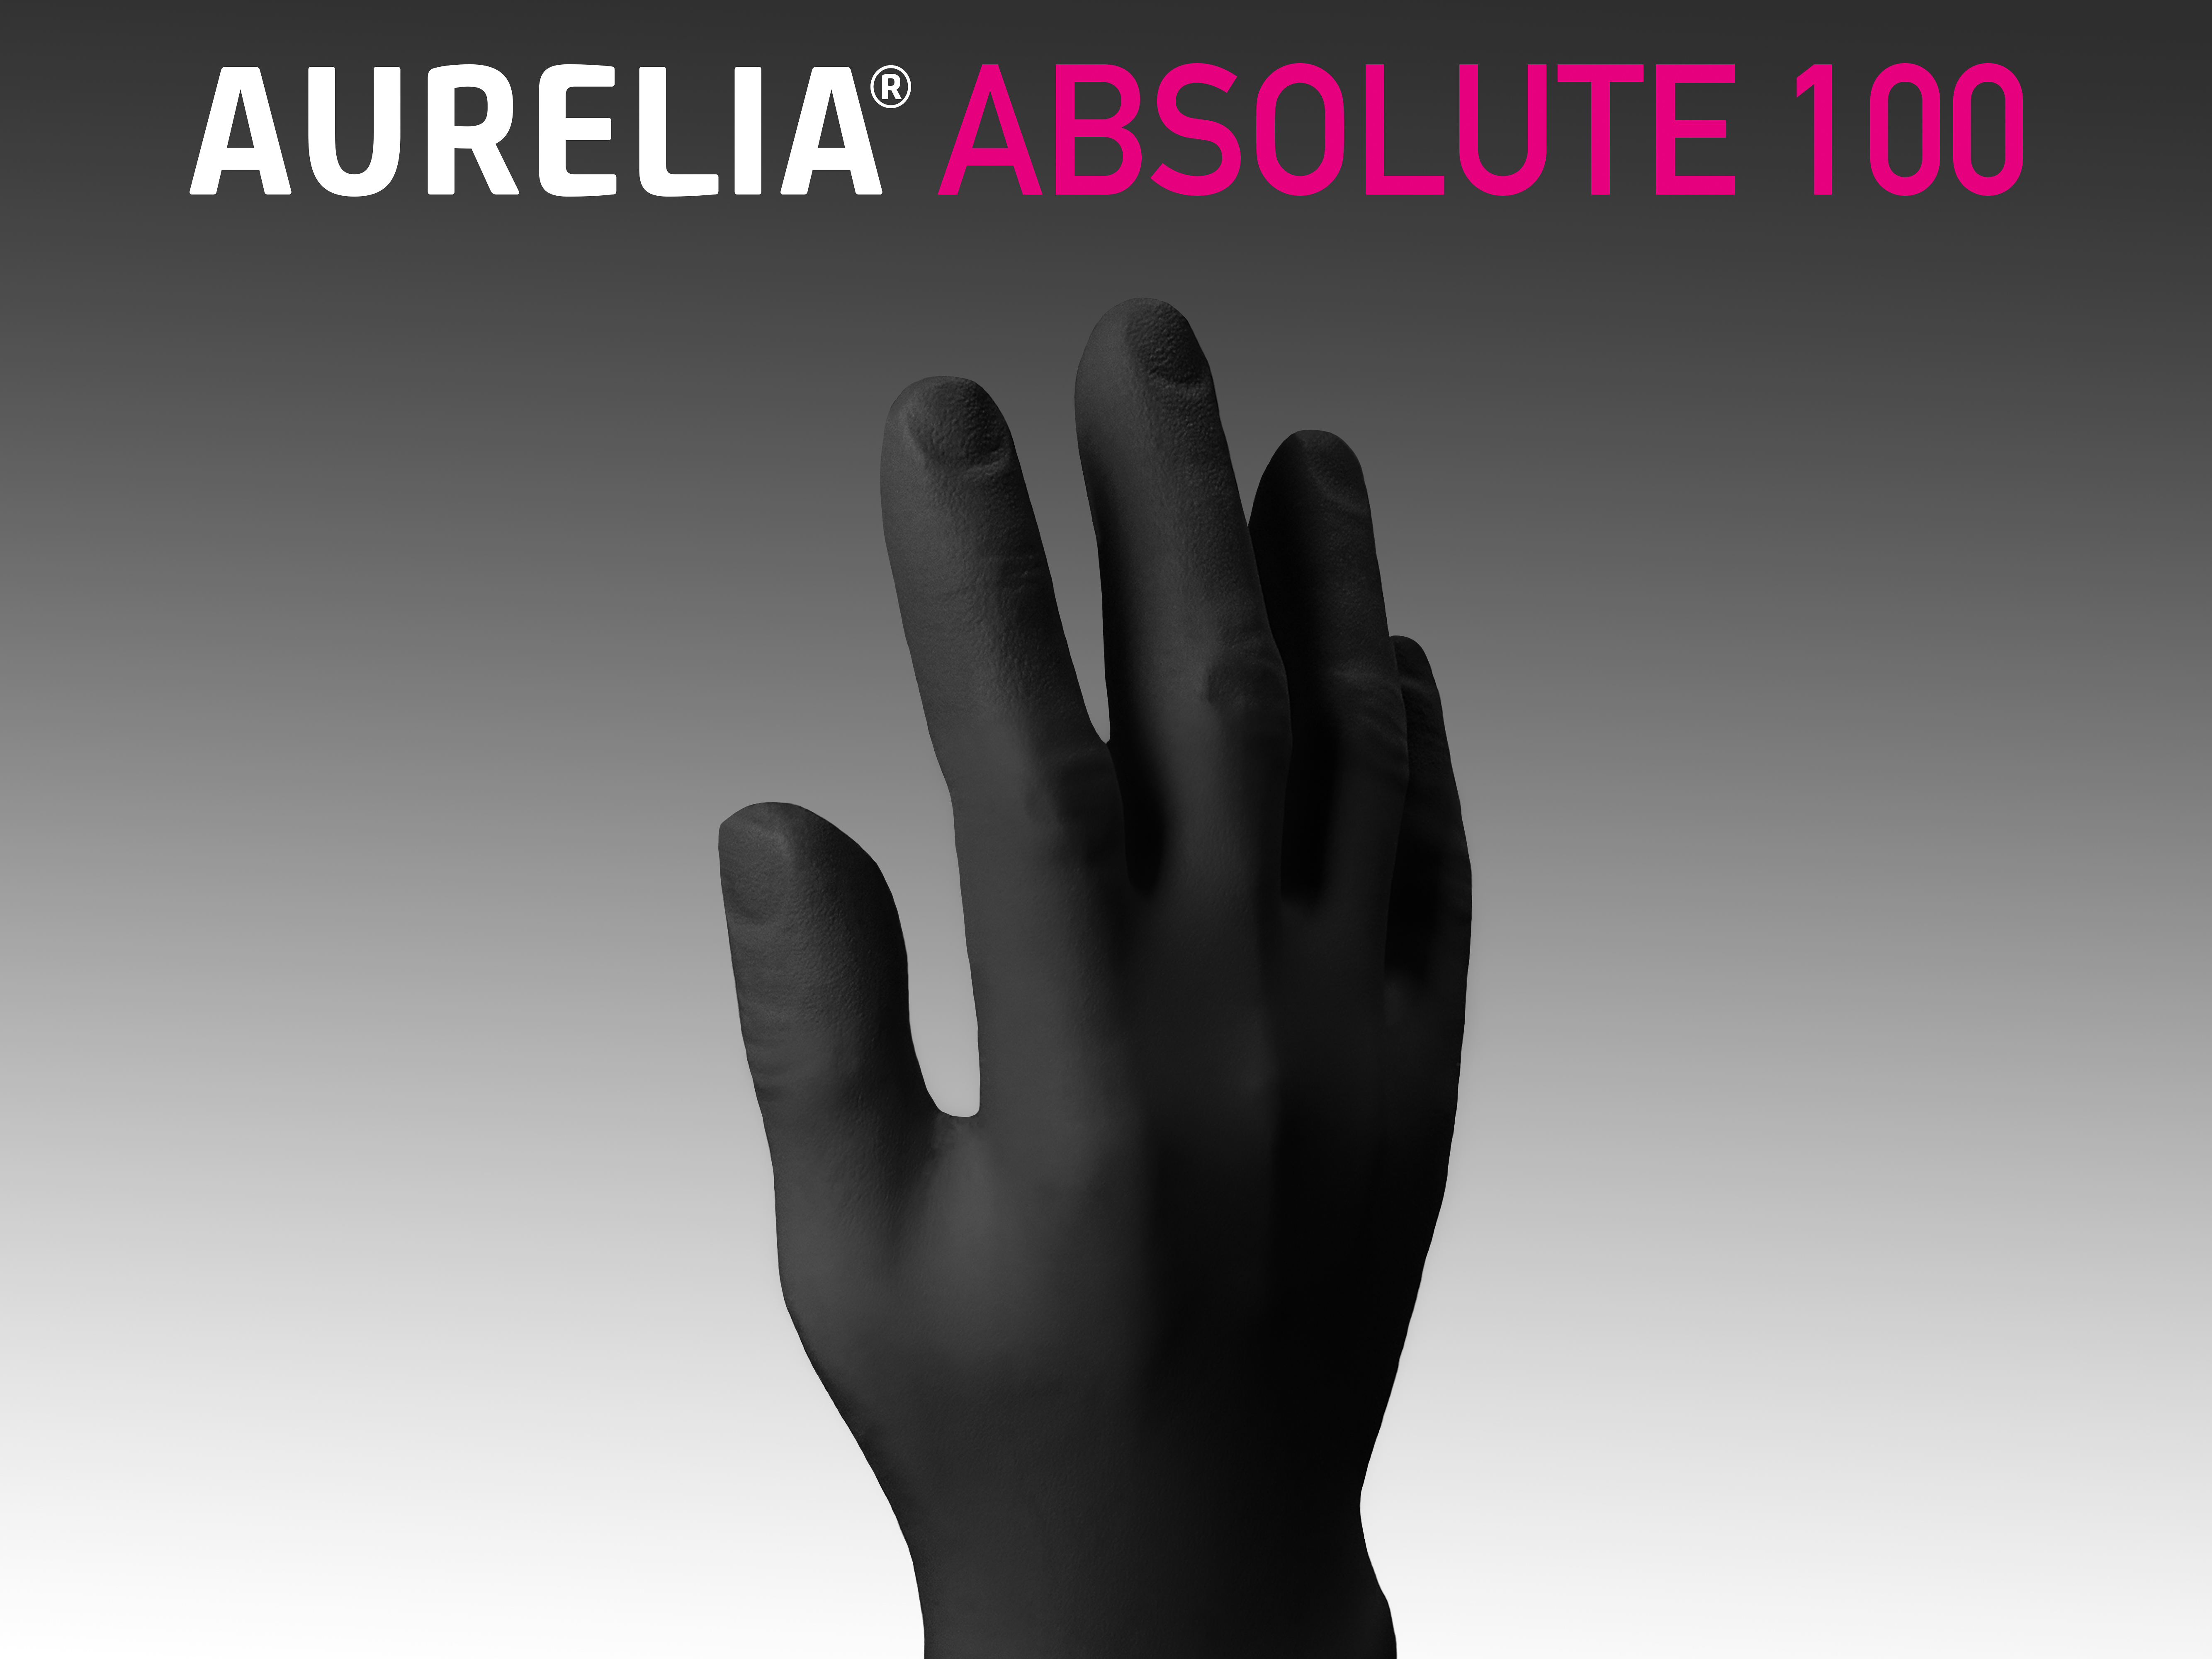 Aurelia Bold Full Hand Website